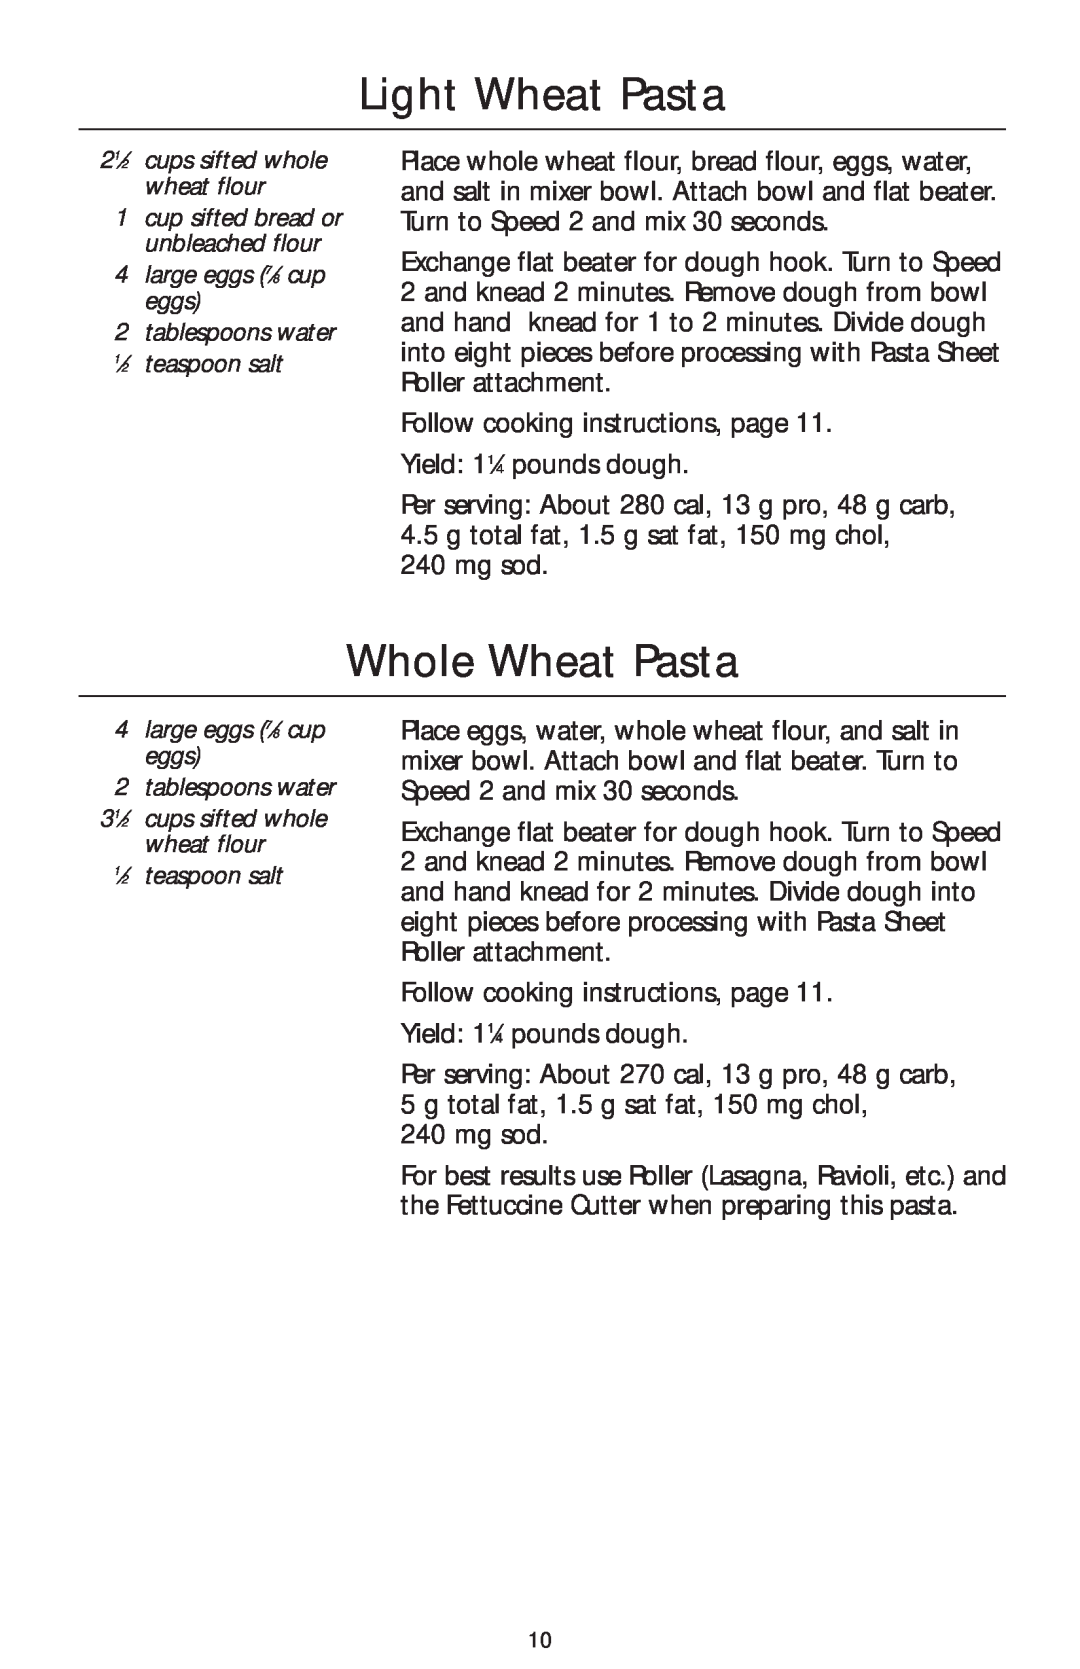 KitchenAid KPCA manual Light Wheat Pasta, Whole Wheat Pasta, 21⁄2 cups sifted whole wheat flour, large eggs 7⁄8 cup eggs 